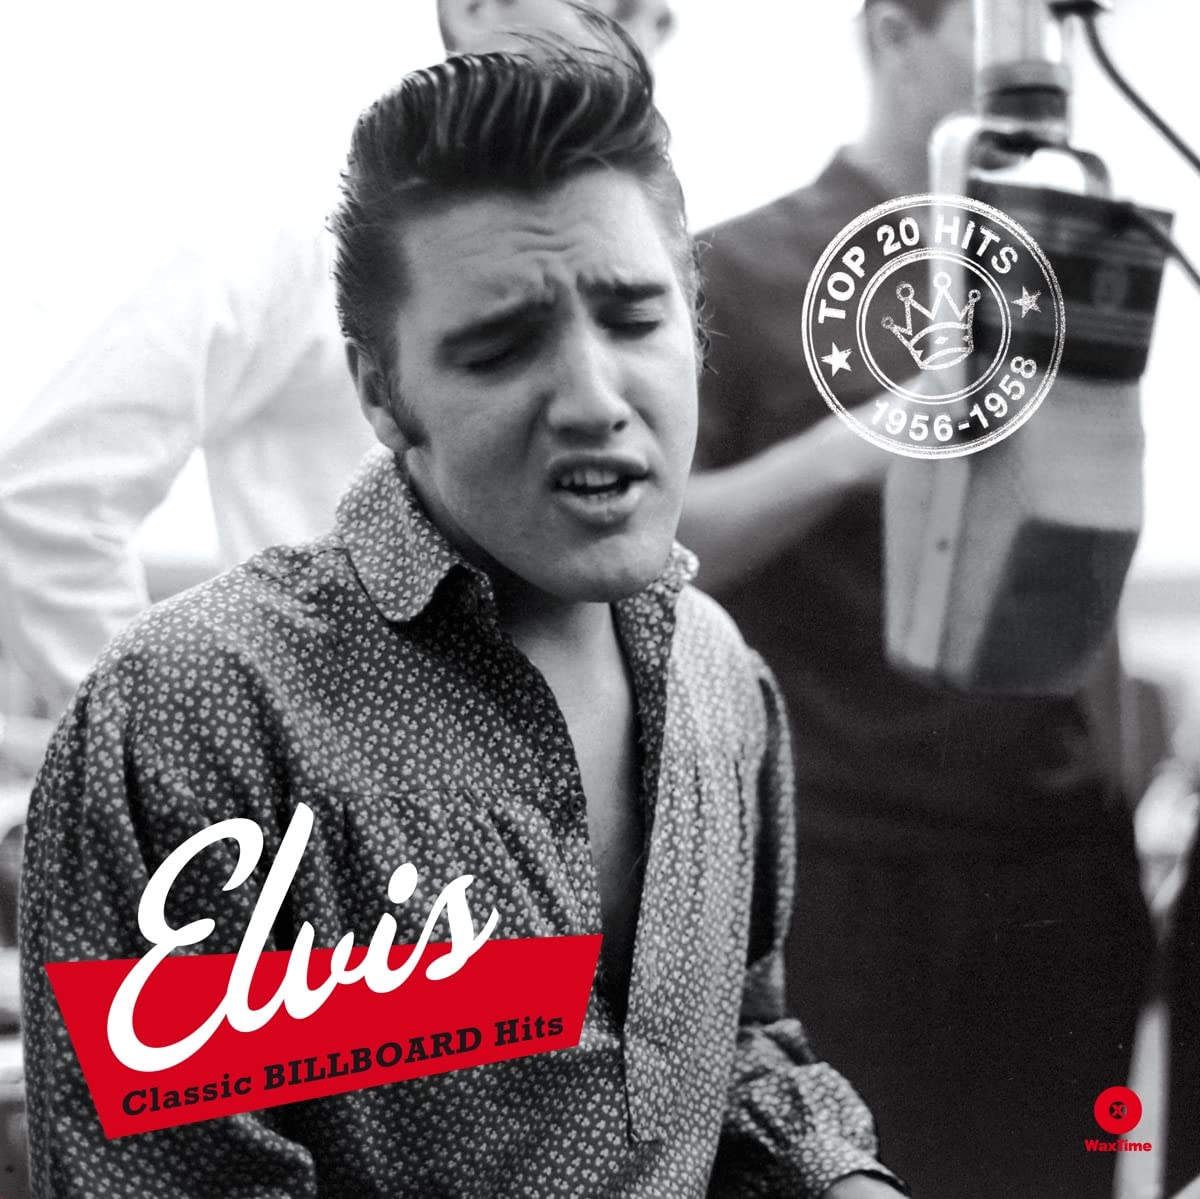 Elvis Presley Classic Billboard Hits 1956-1958 Limited Vinyl LP